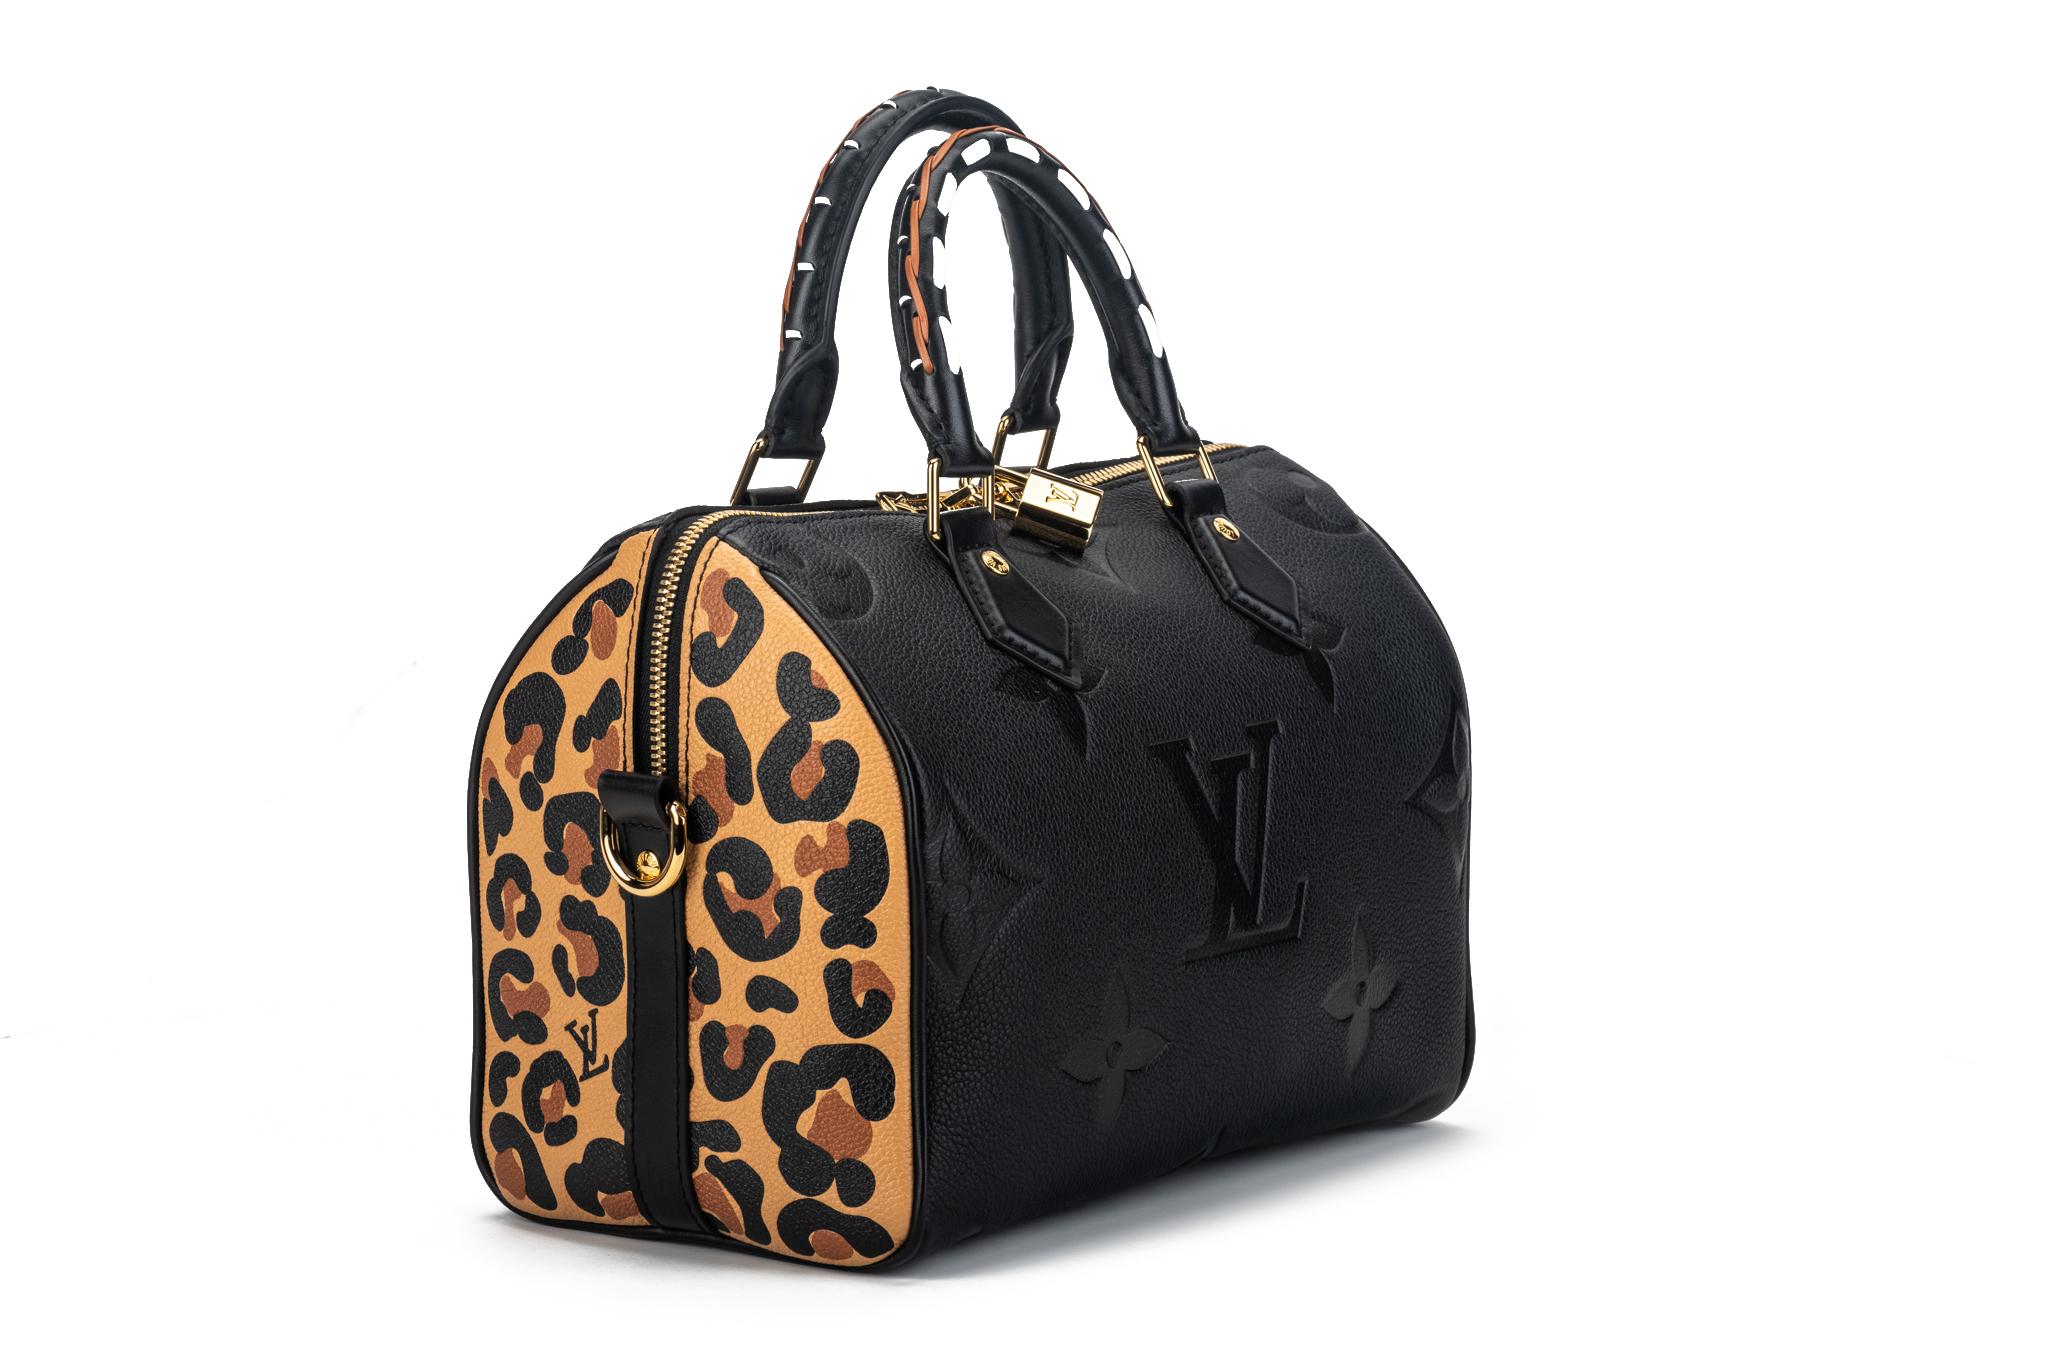  Louis Vuitton Wild At Heart Speedy sac 25 Pour femmes 